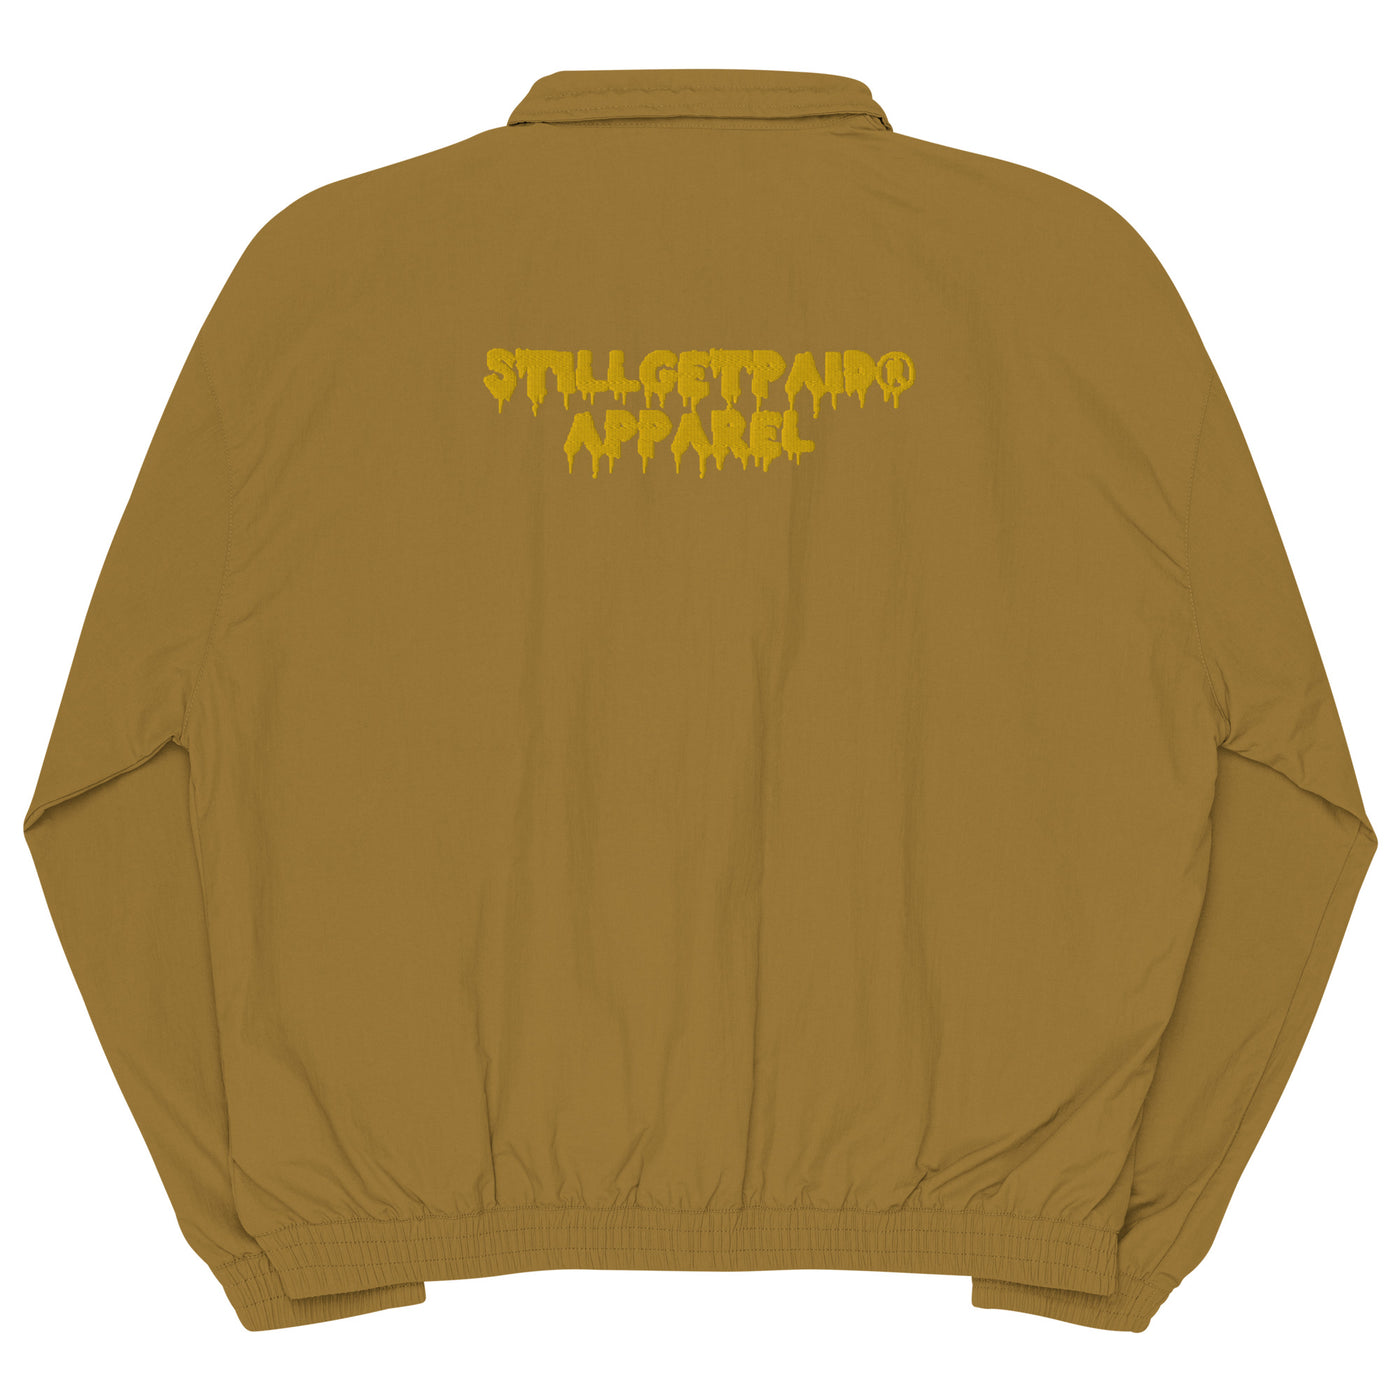 STILLGETPAID® tracksuit jacket